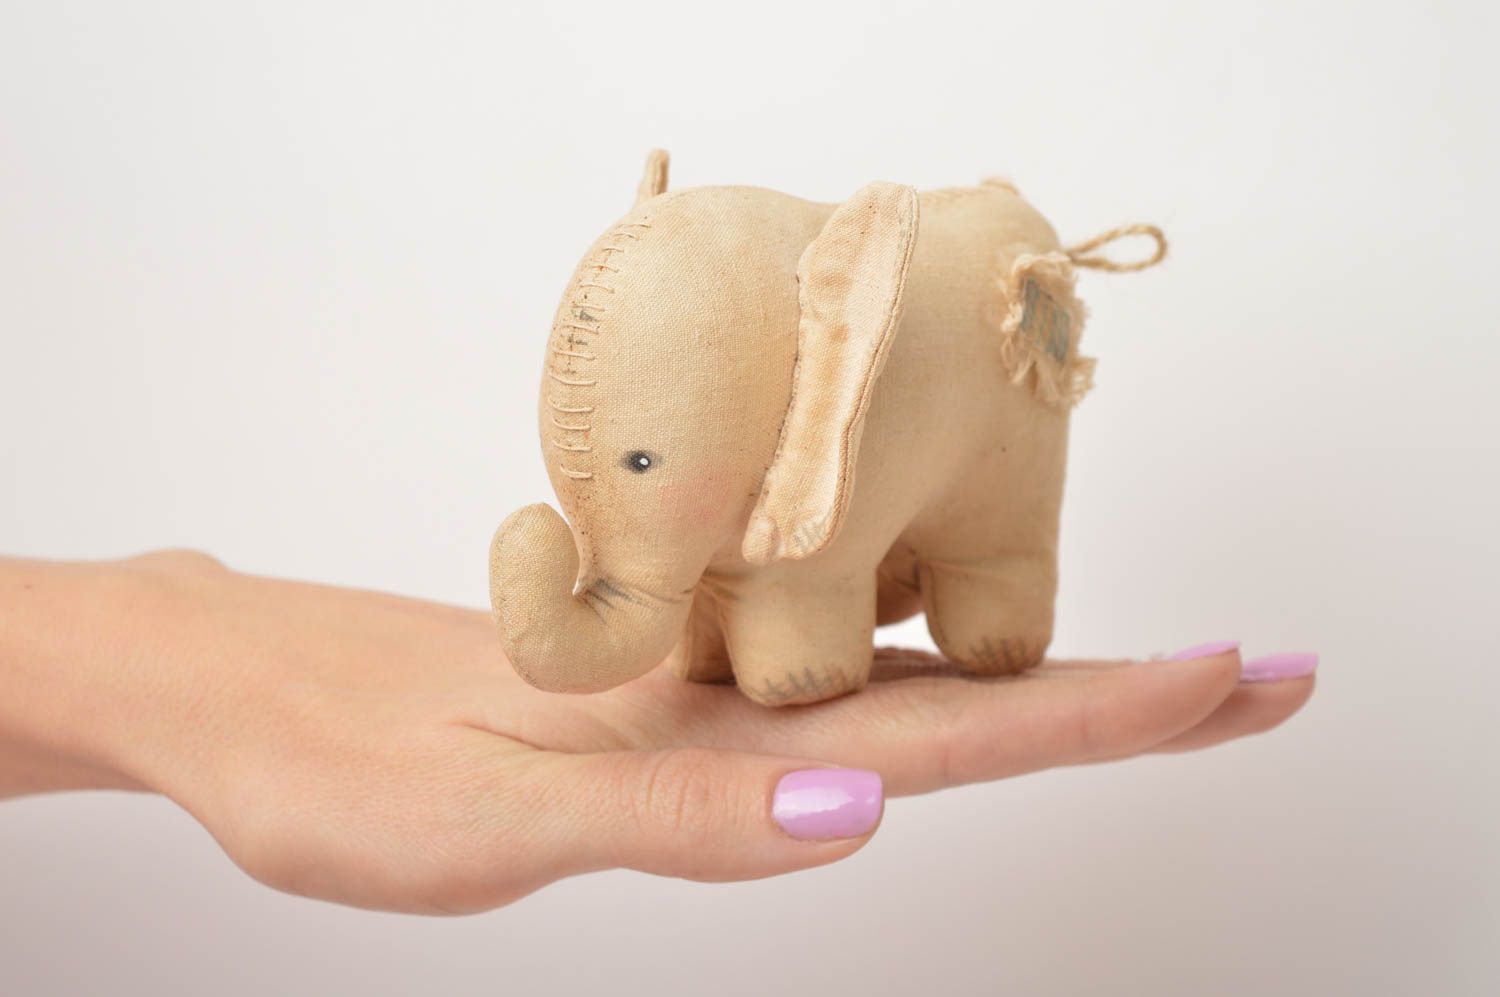 Handmade cute soft toy elephant stuffed toy for children home decor ideas photo 5